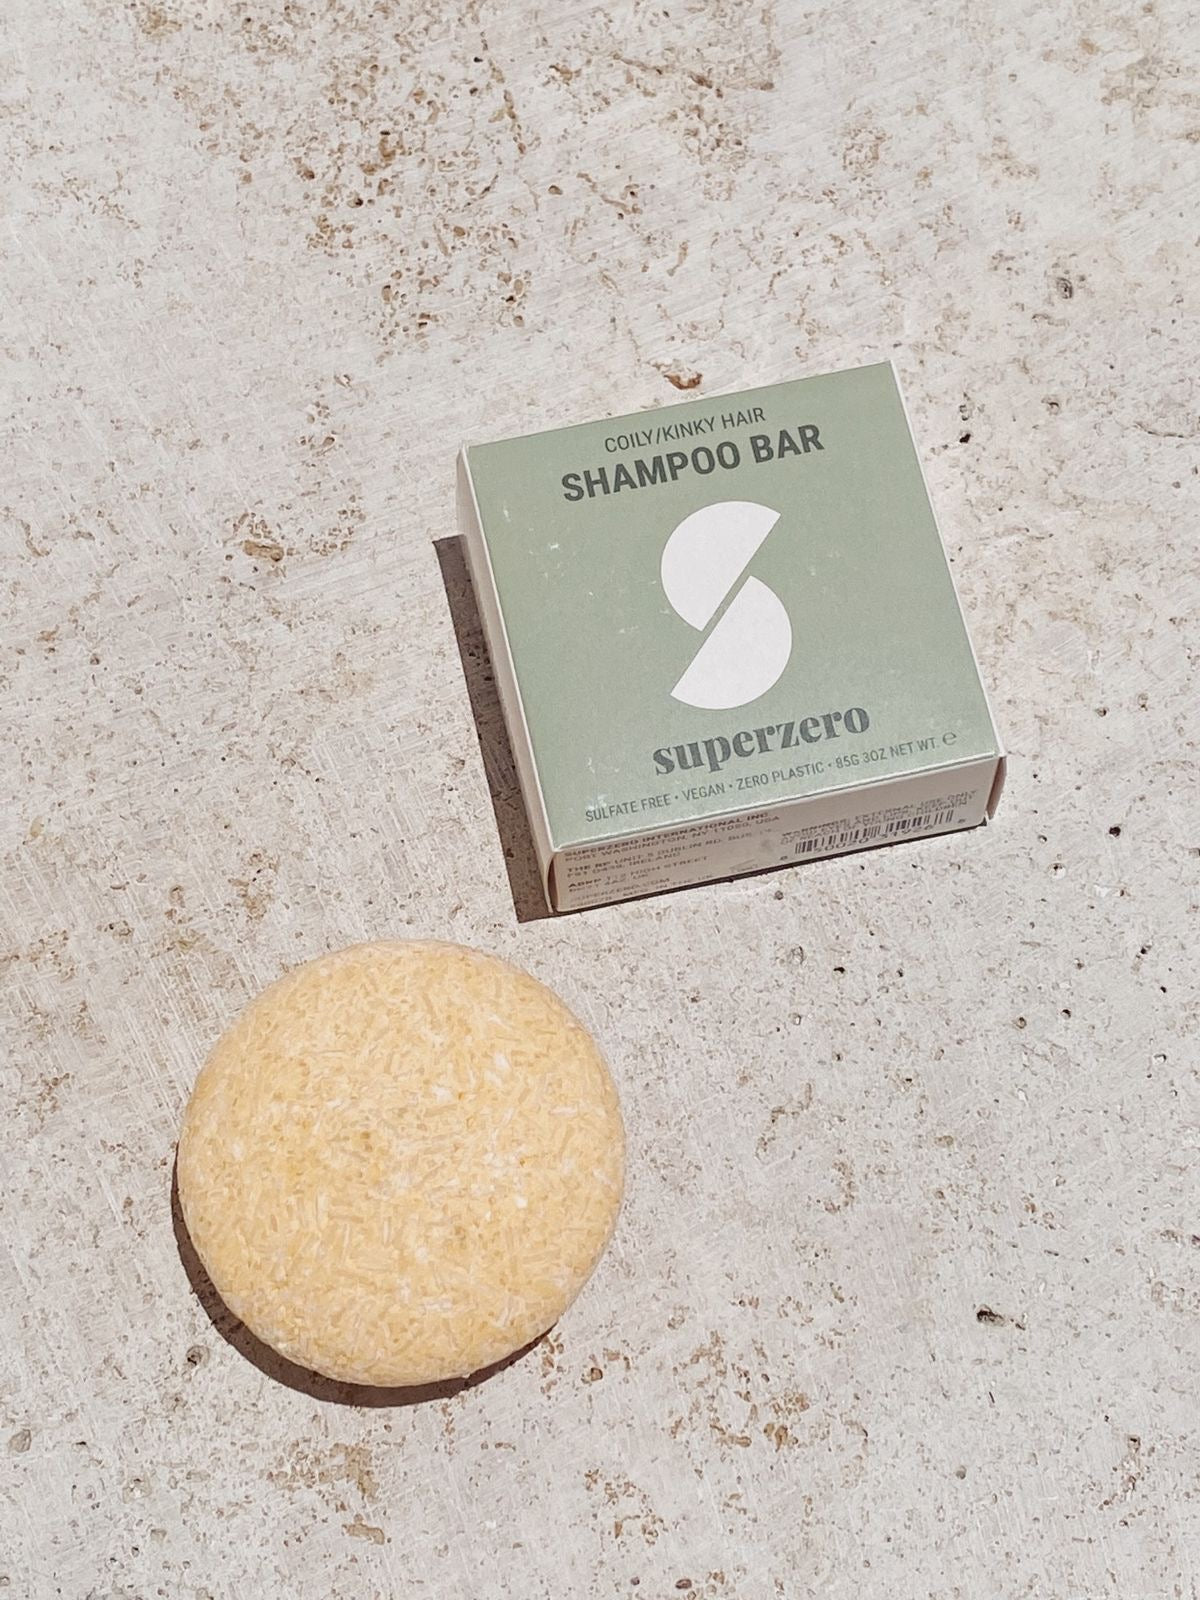 shampoo bar by superzero